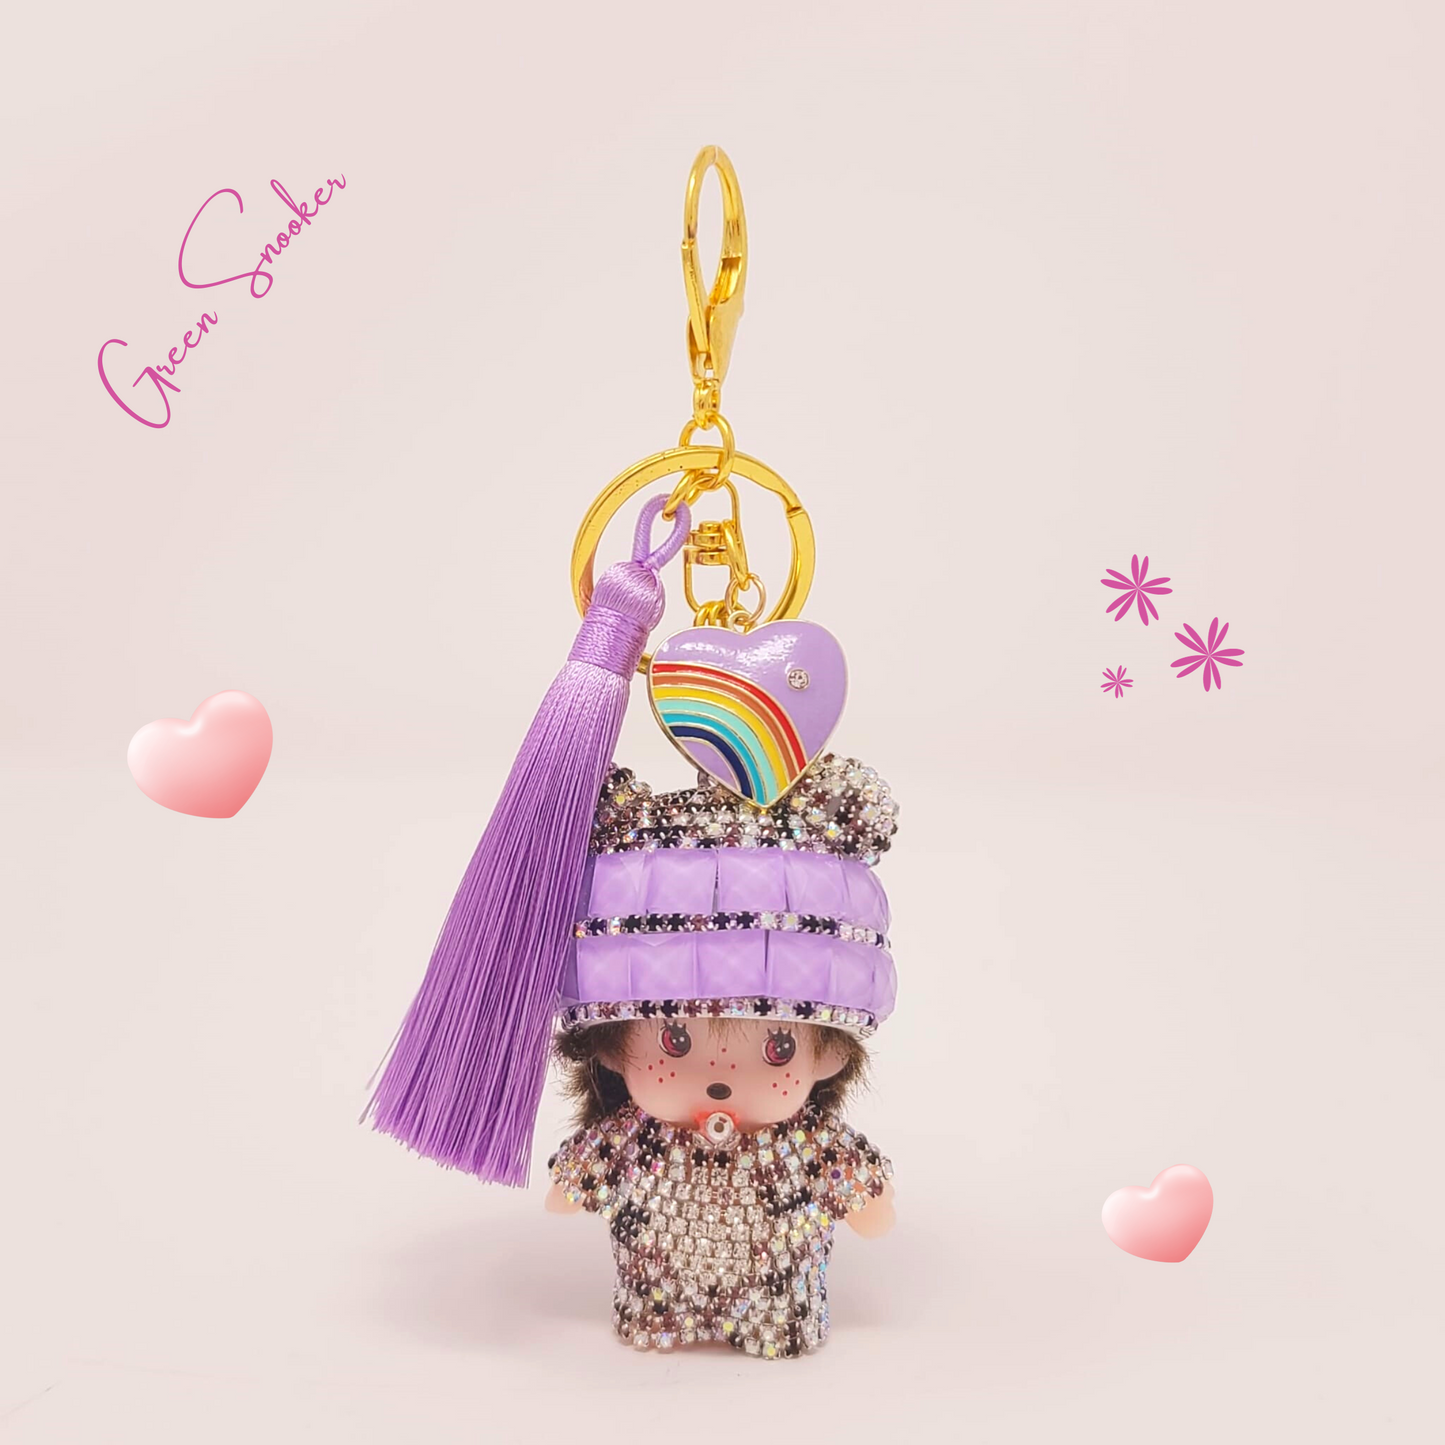 Keychain, Cute Monchichi Tassel with a Heart, bag pendant